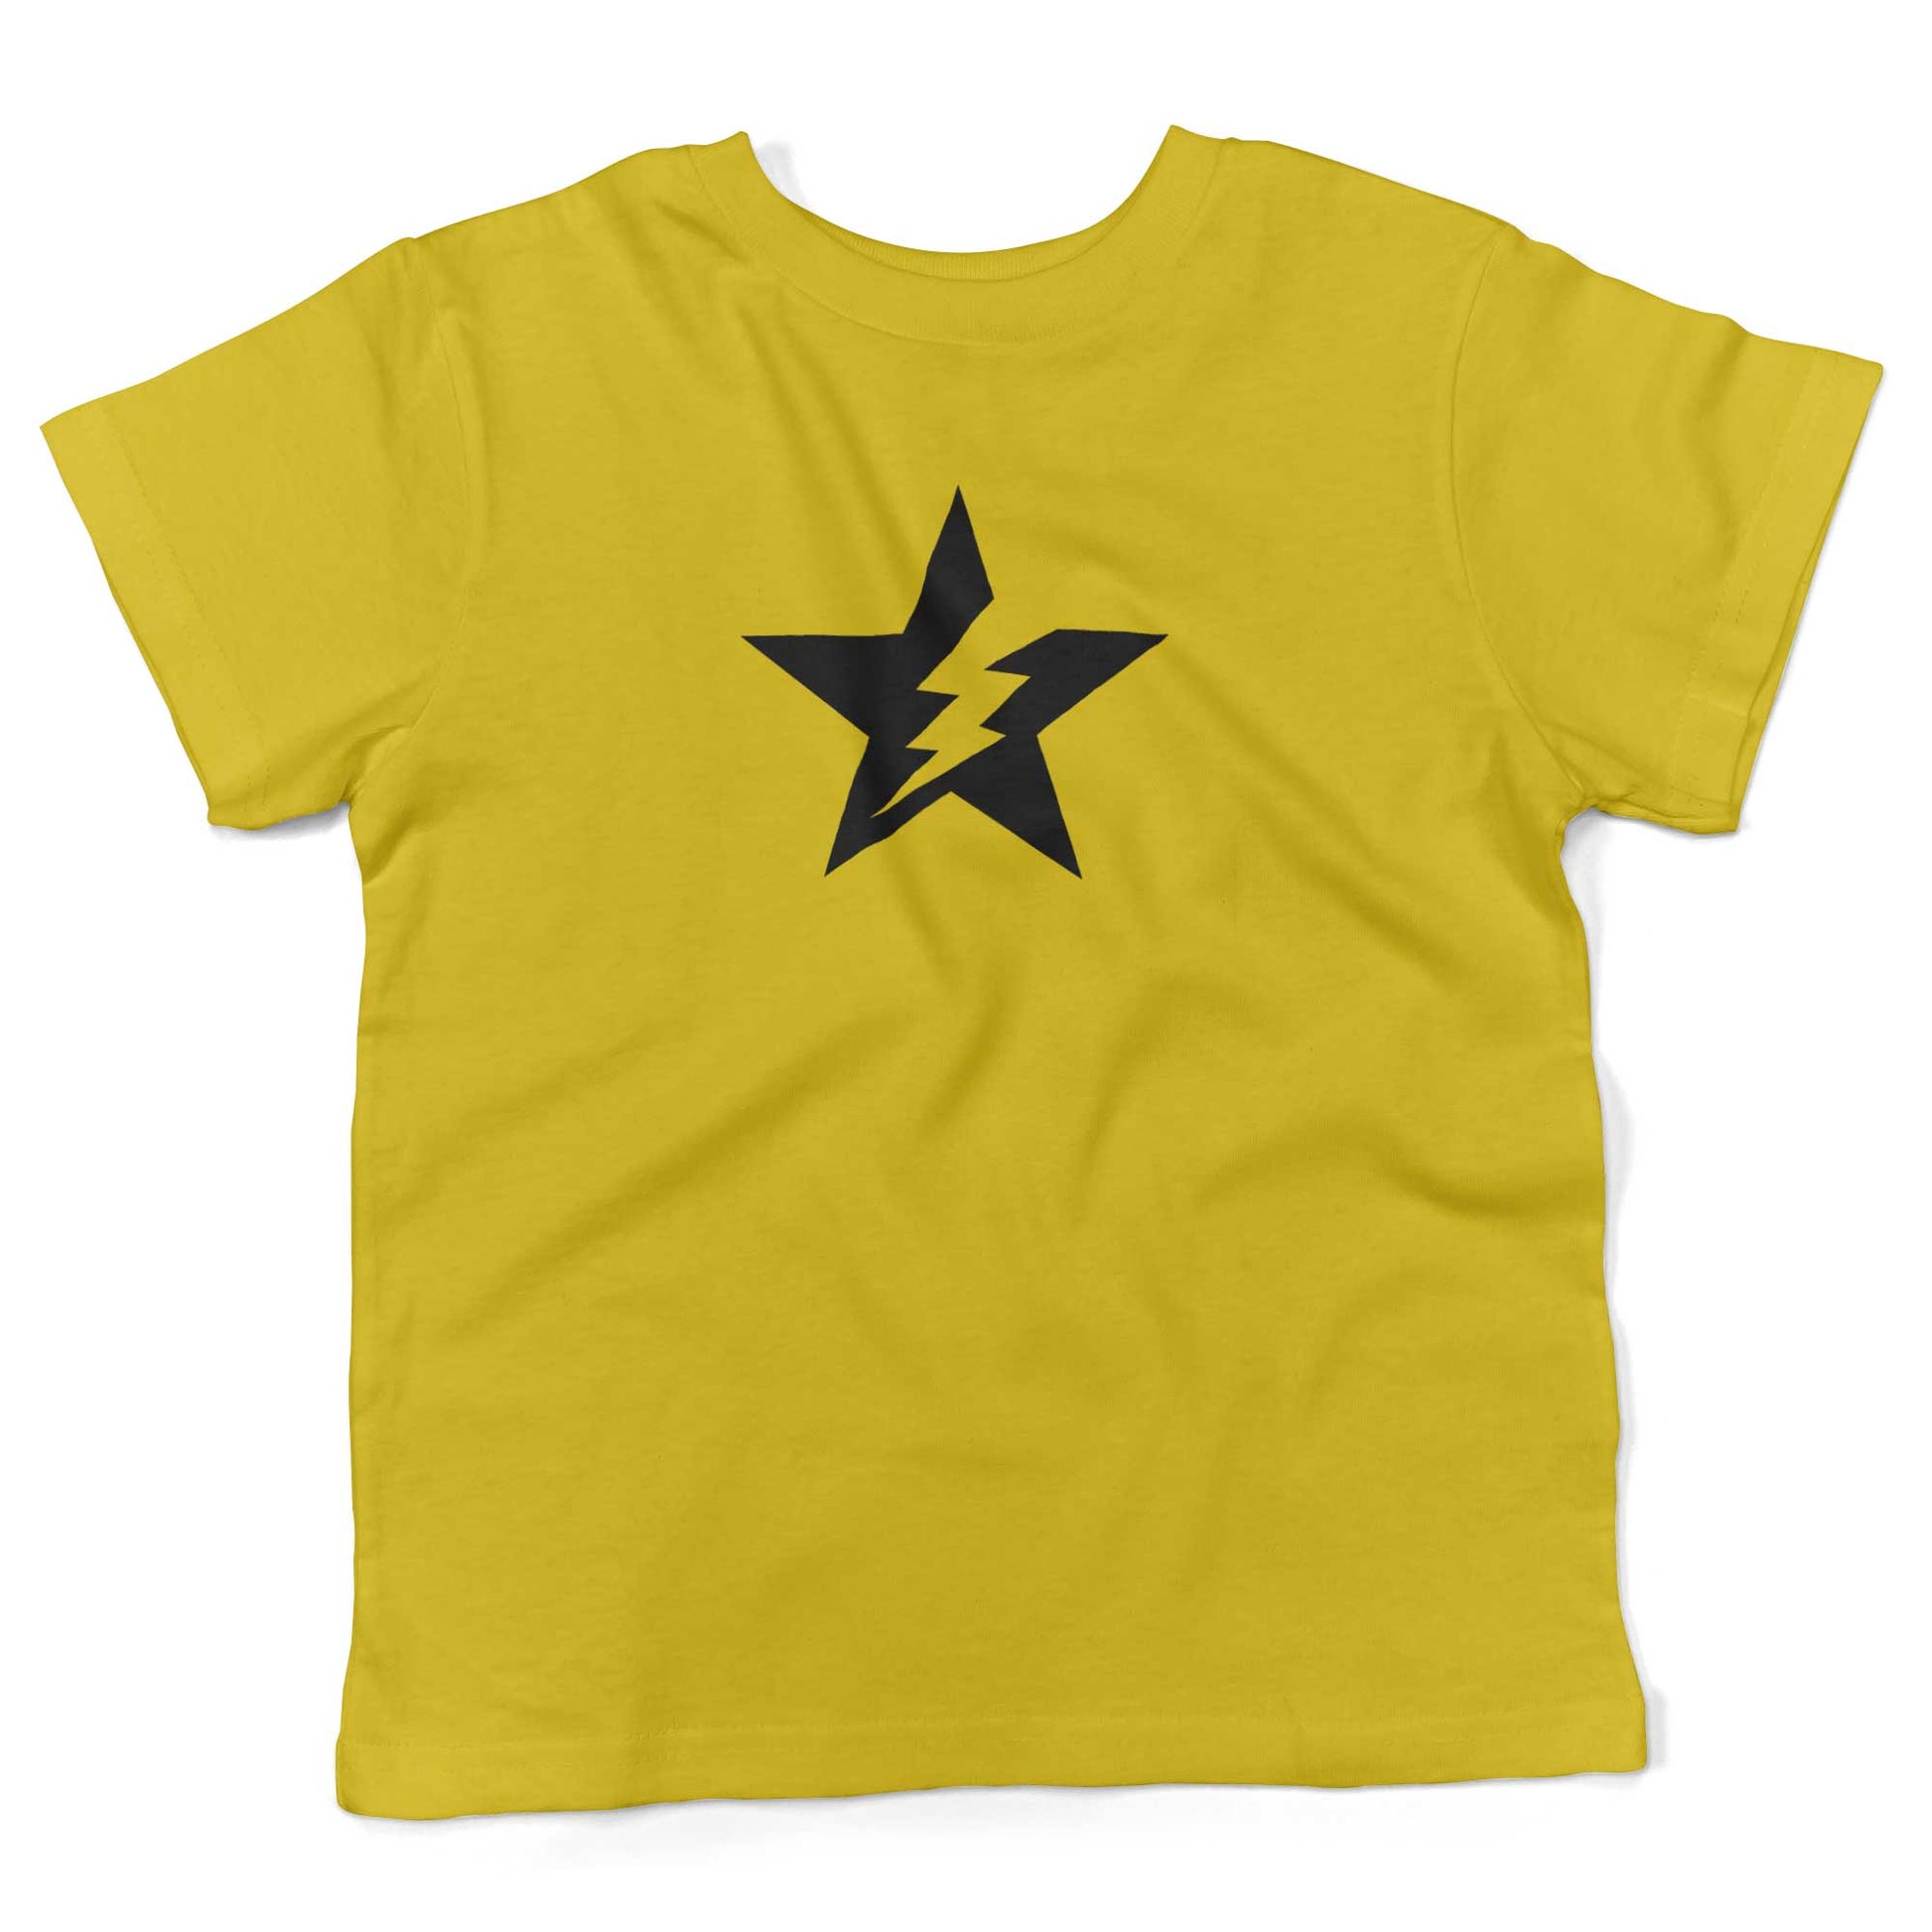 Star Bolt Toddler Shirt-Sunshine Yellow-2T